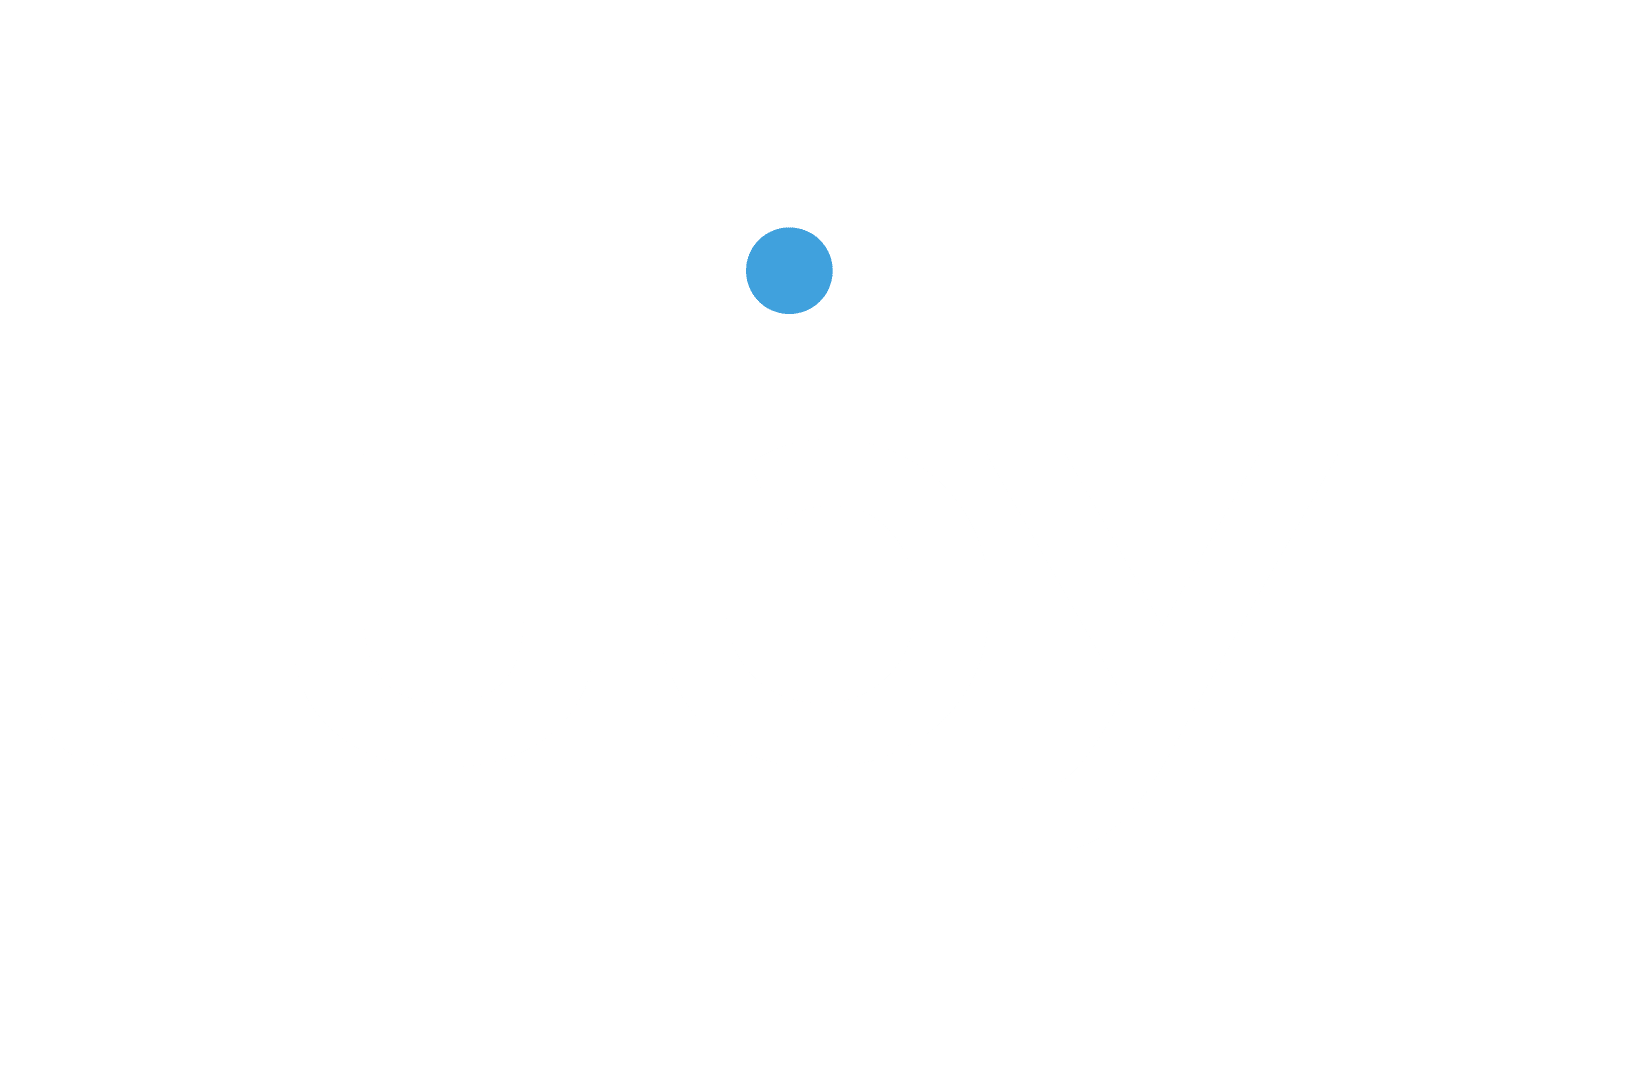 Case Tiba Luby Software